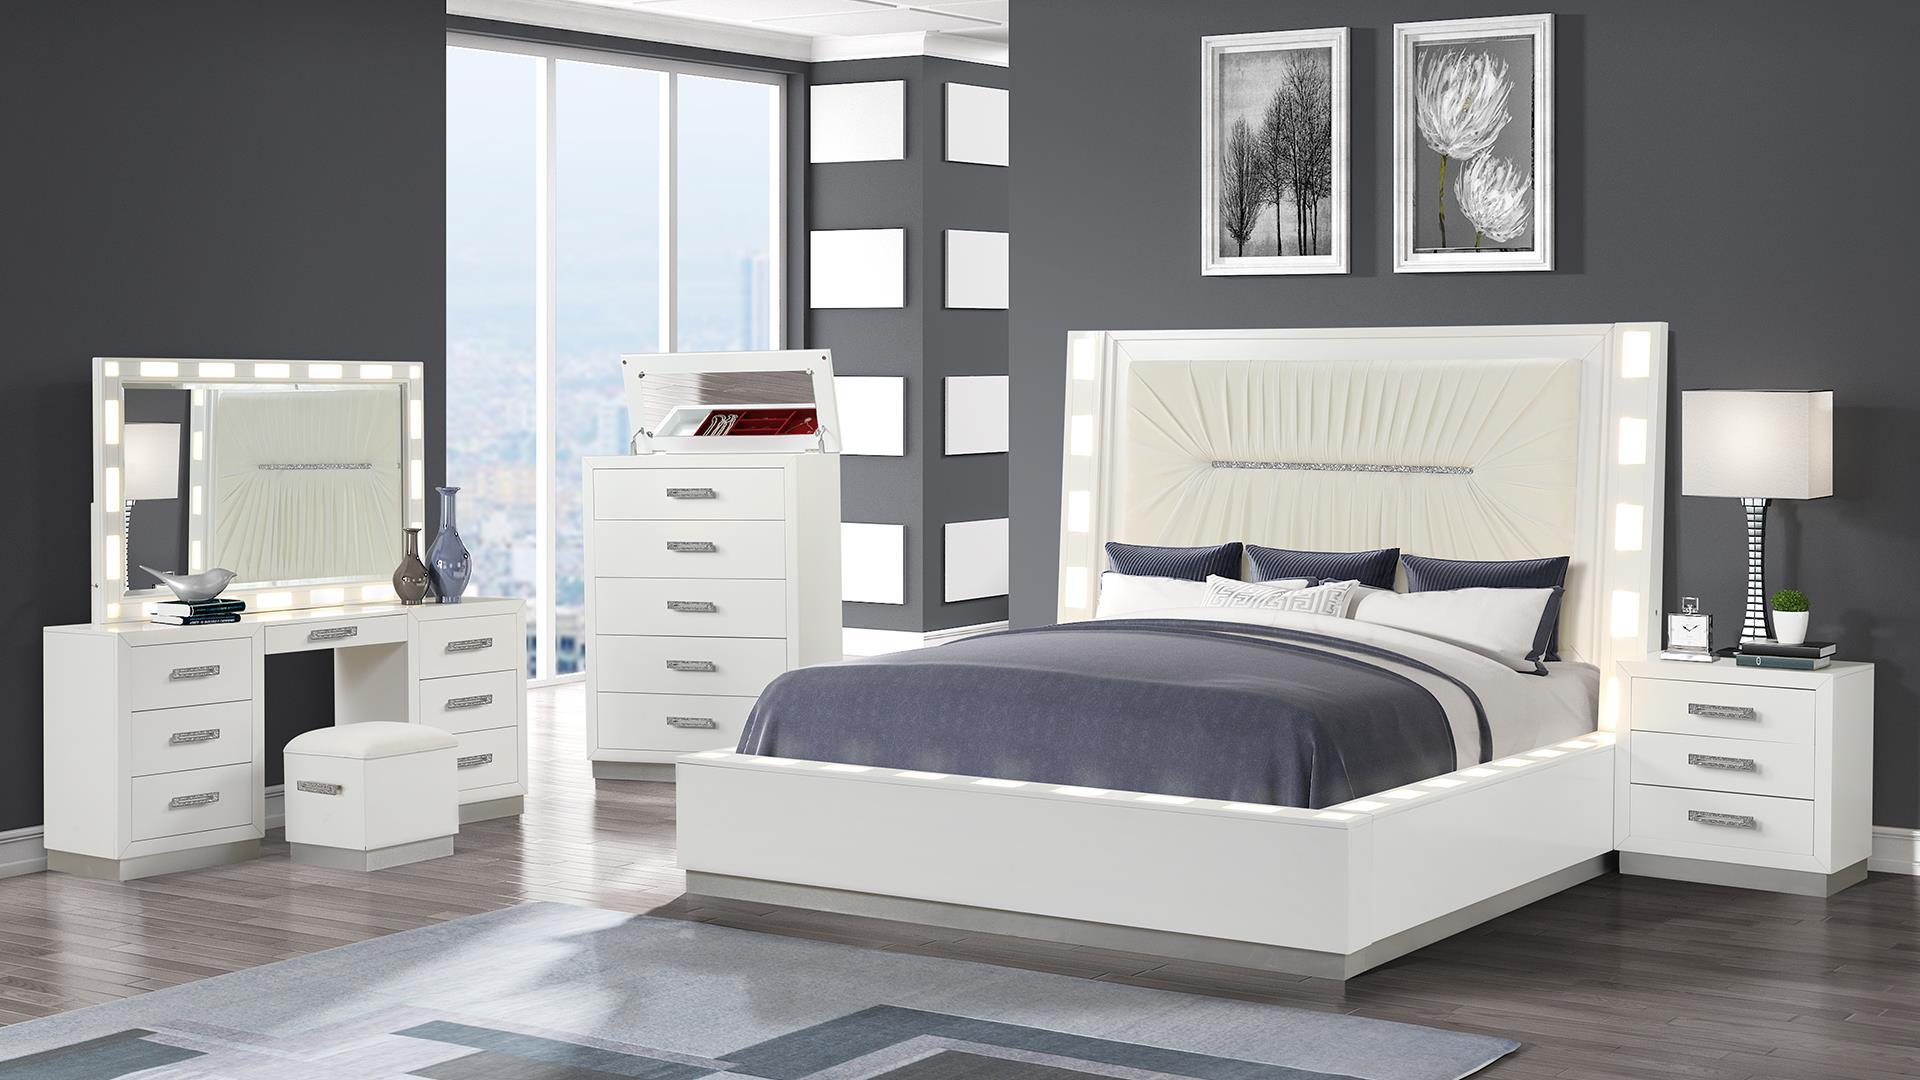 

    
COCO-EK-BED Galaxy Home Furniture Platform Bed
